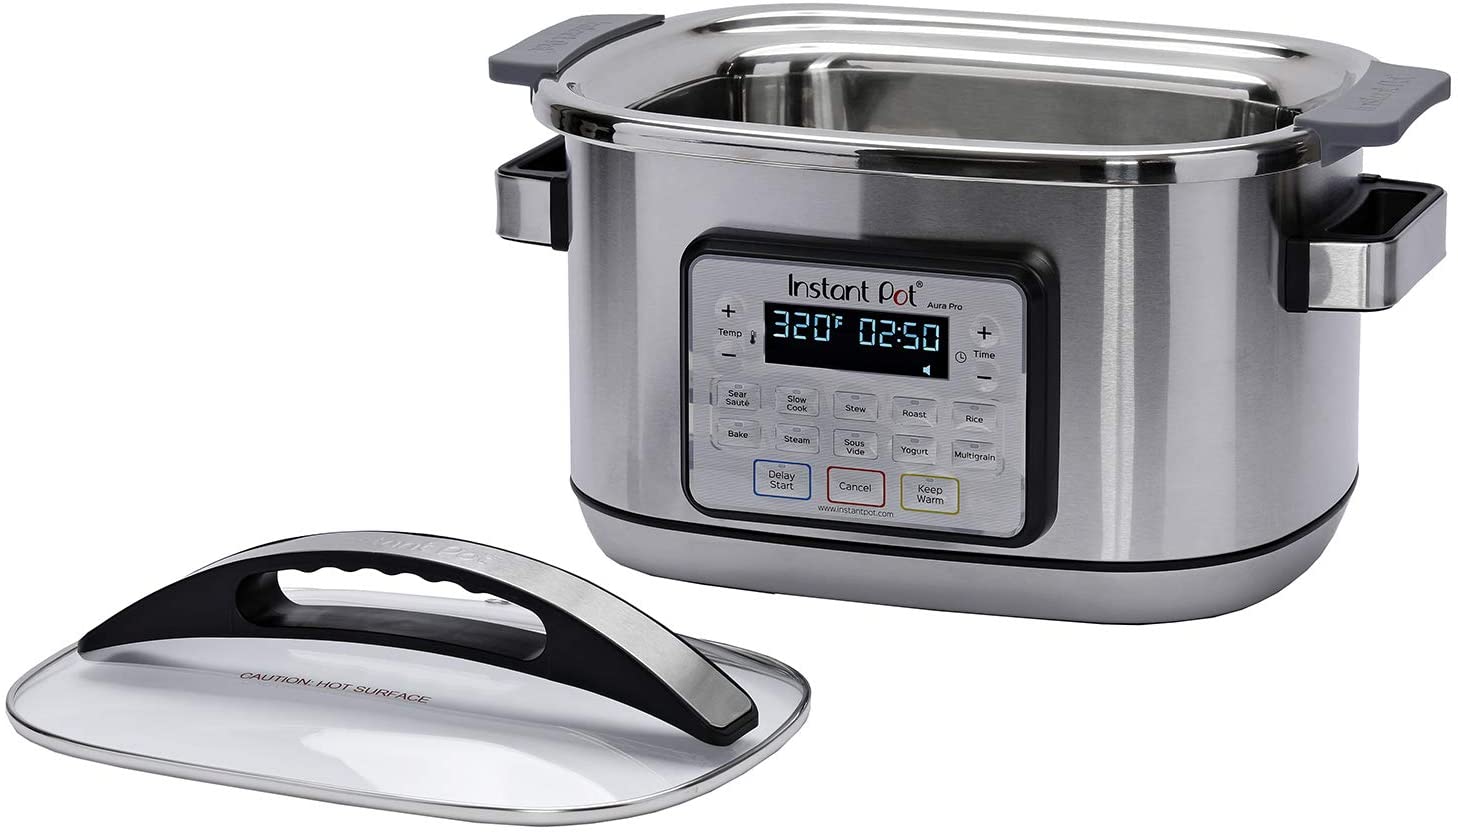 https://kitchenteller.com/wp-content/uploads/2021/03/Instant-Pot-Aura-Pro-Multi-Use-Programmable-Slow-Cooker-with-Sous-Vide-8-quart-Silver-AURA-PRO-6QT-review-lifted-lid.jpg